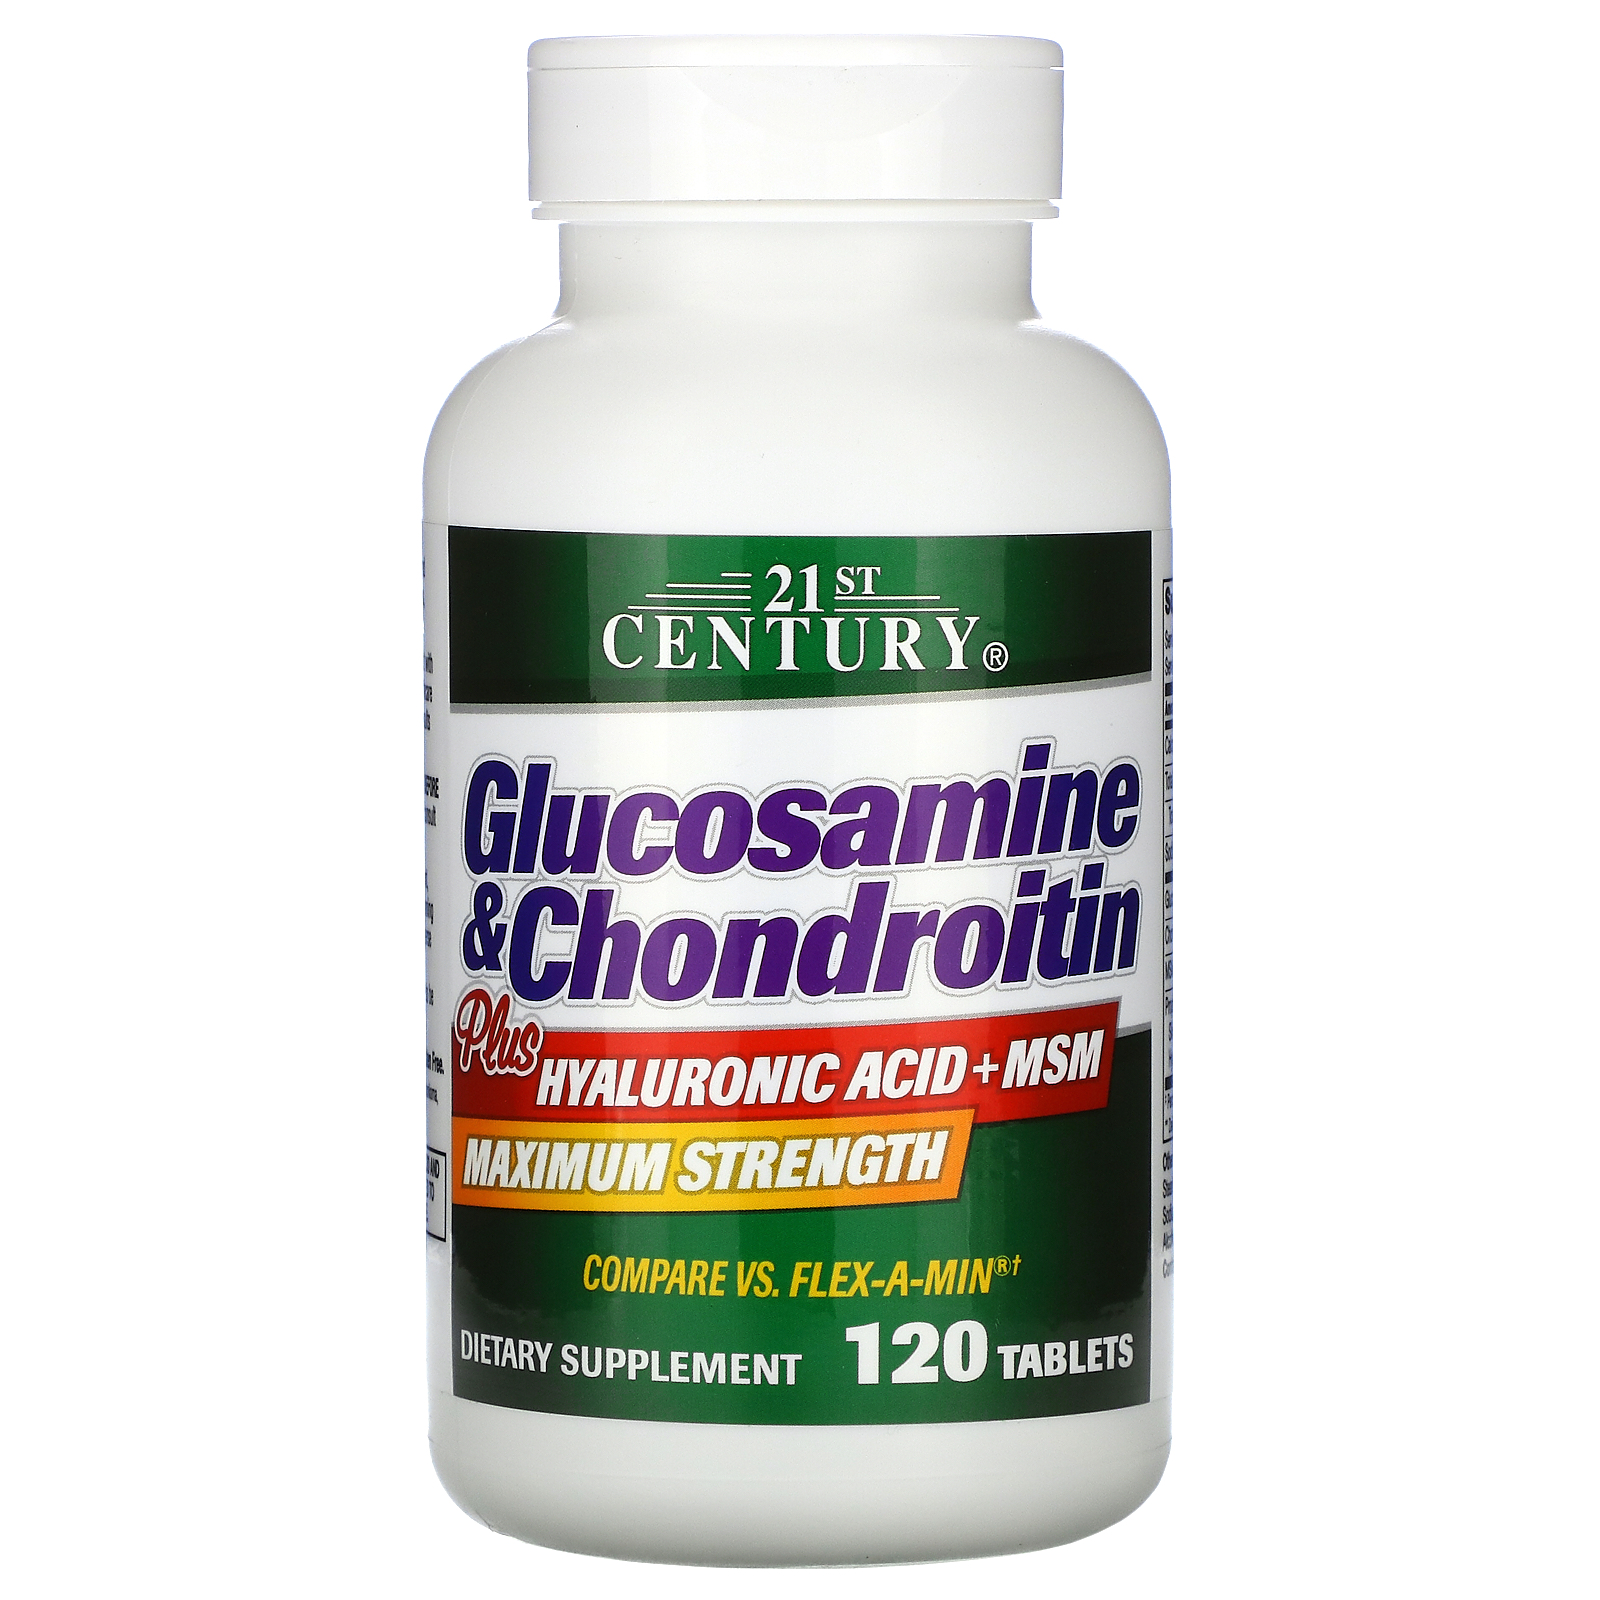 chondroitin glucosamine maximum)